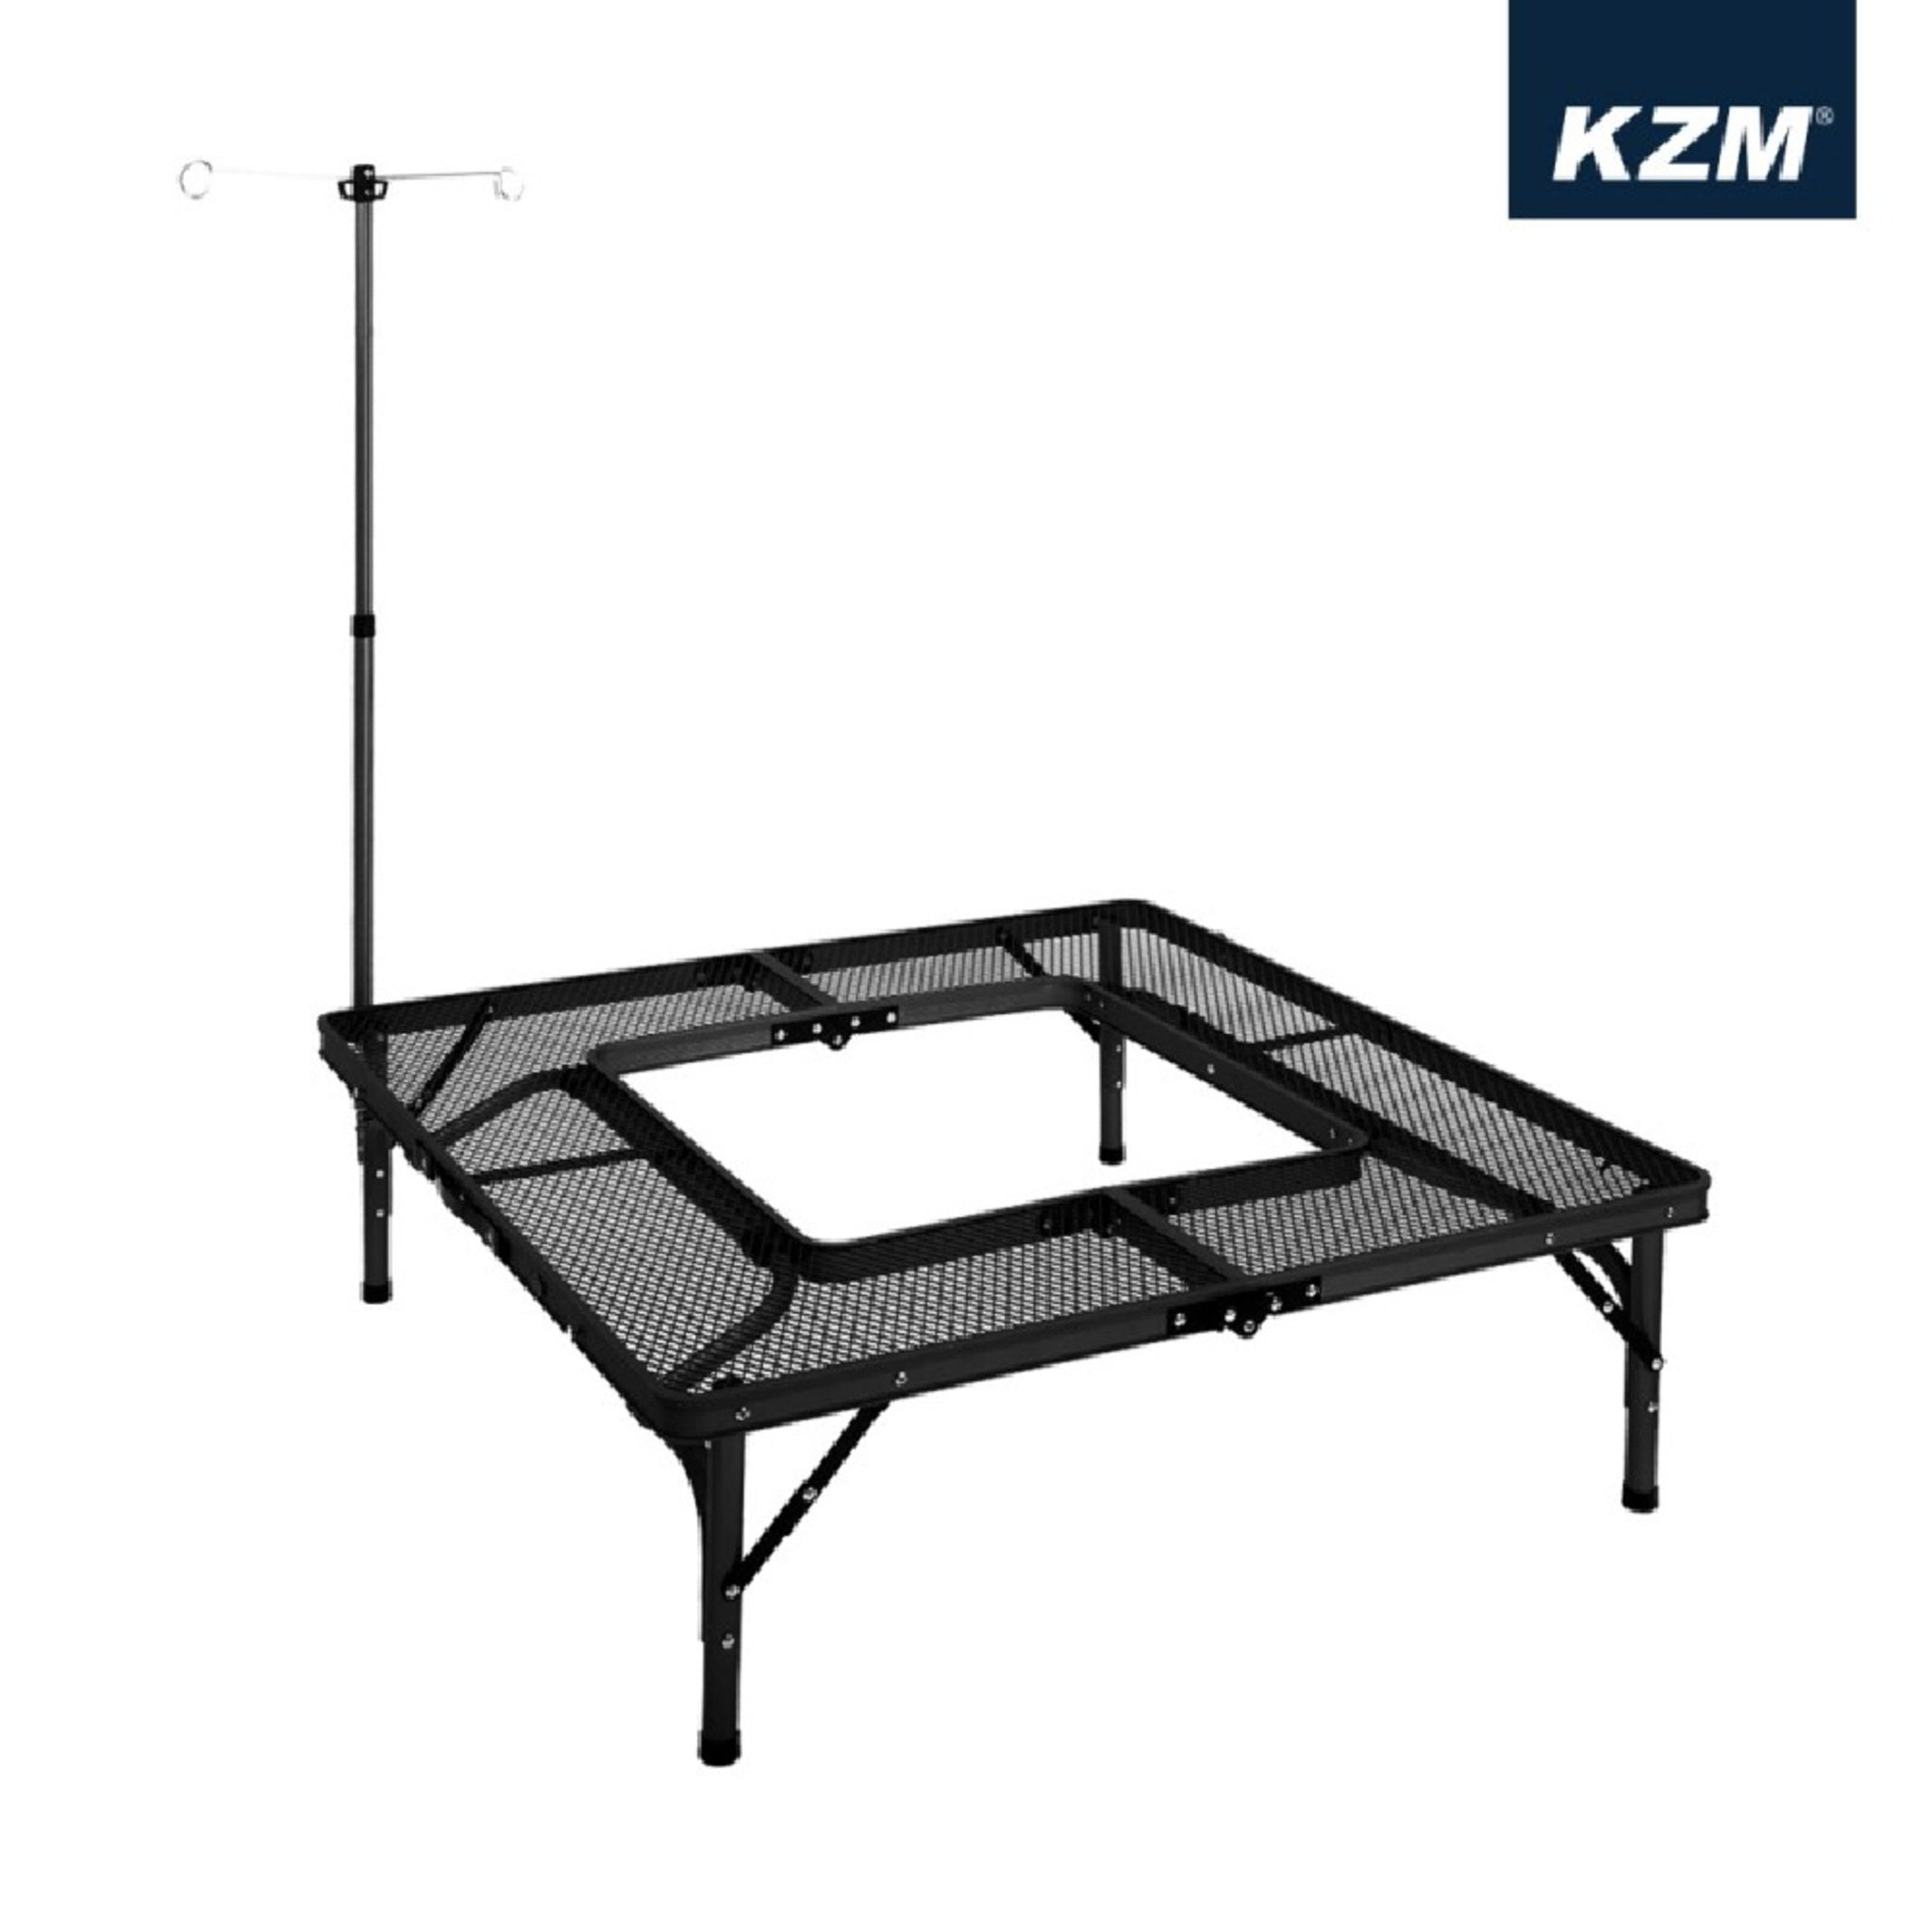 KZM 鋼網圍爐桌 K9T3U012